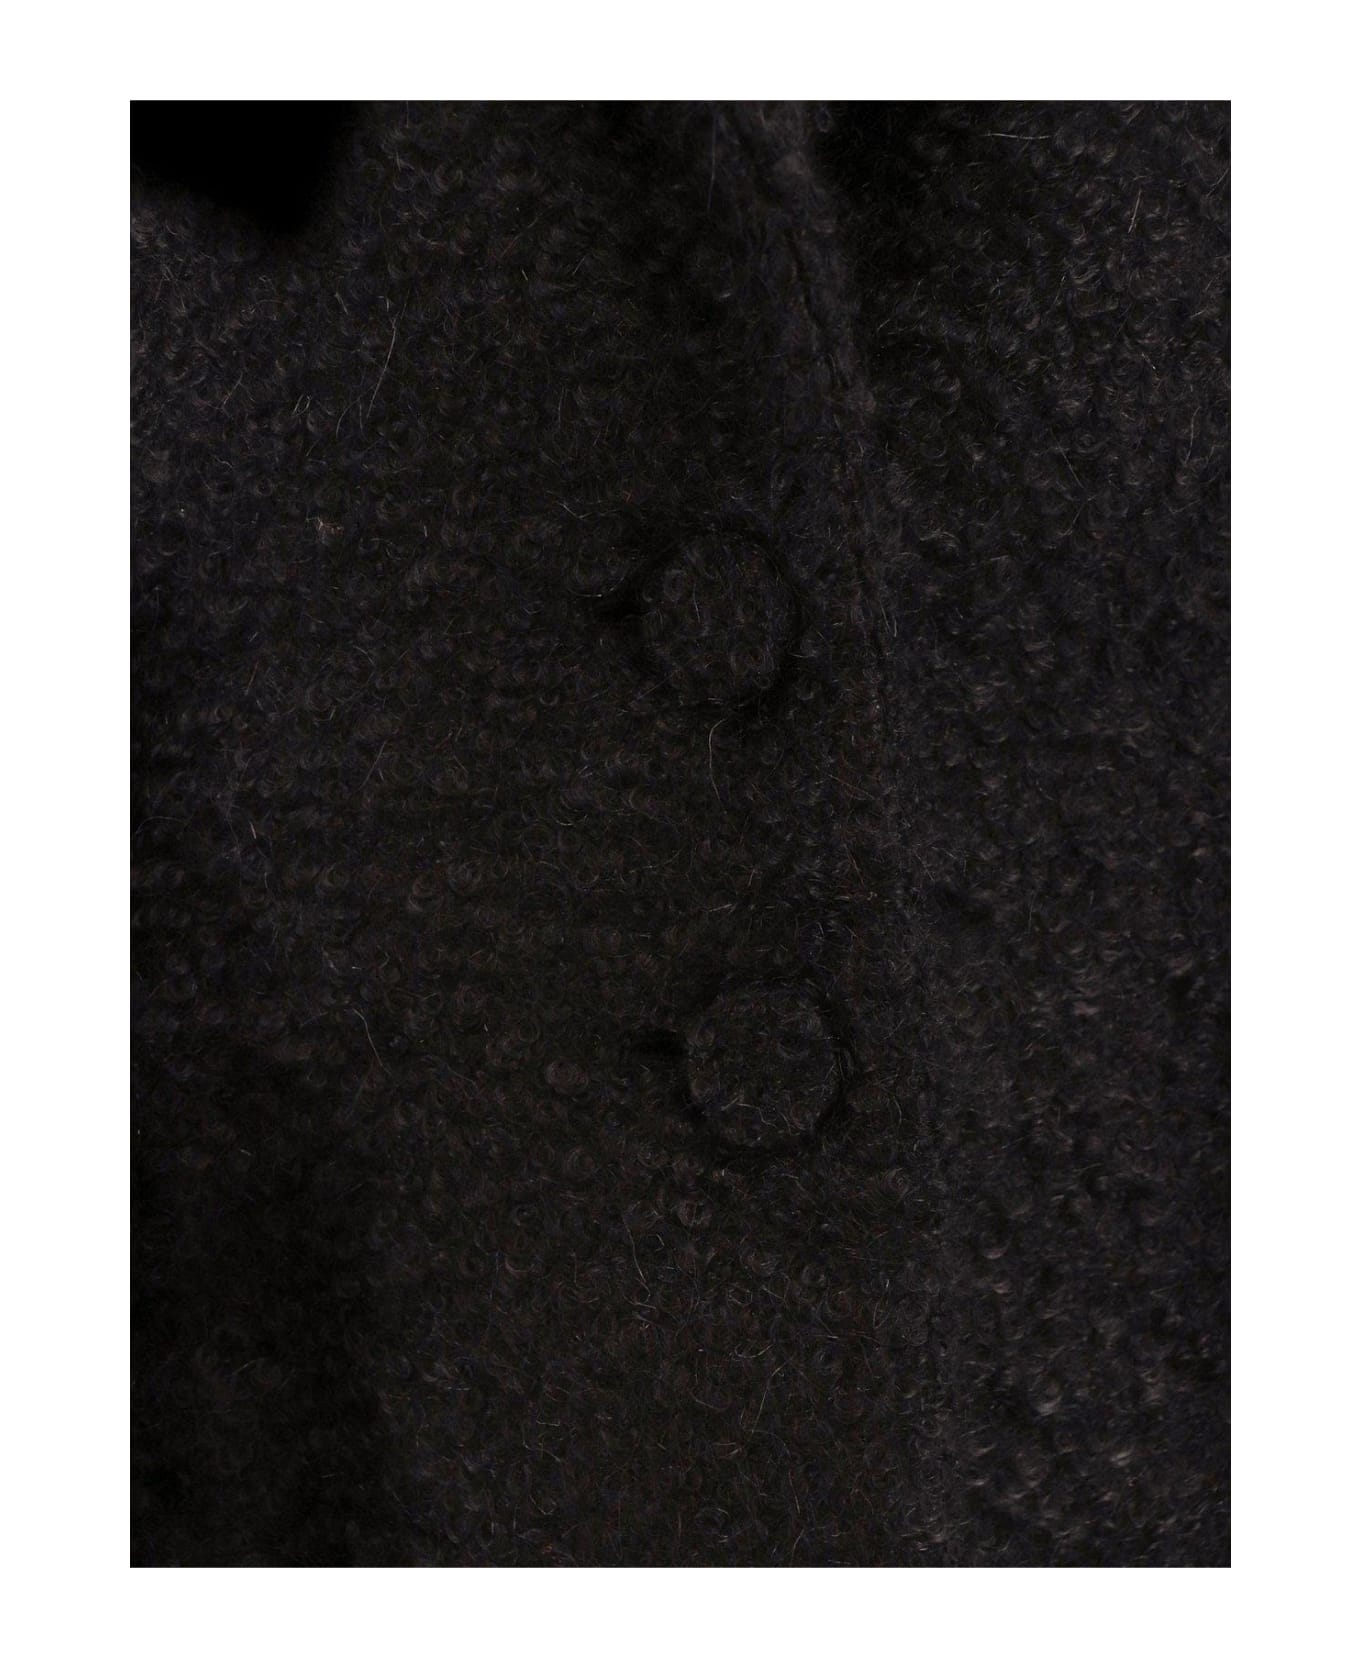 Givenchy Single-breasted Long Coat - Black